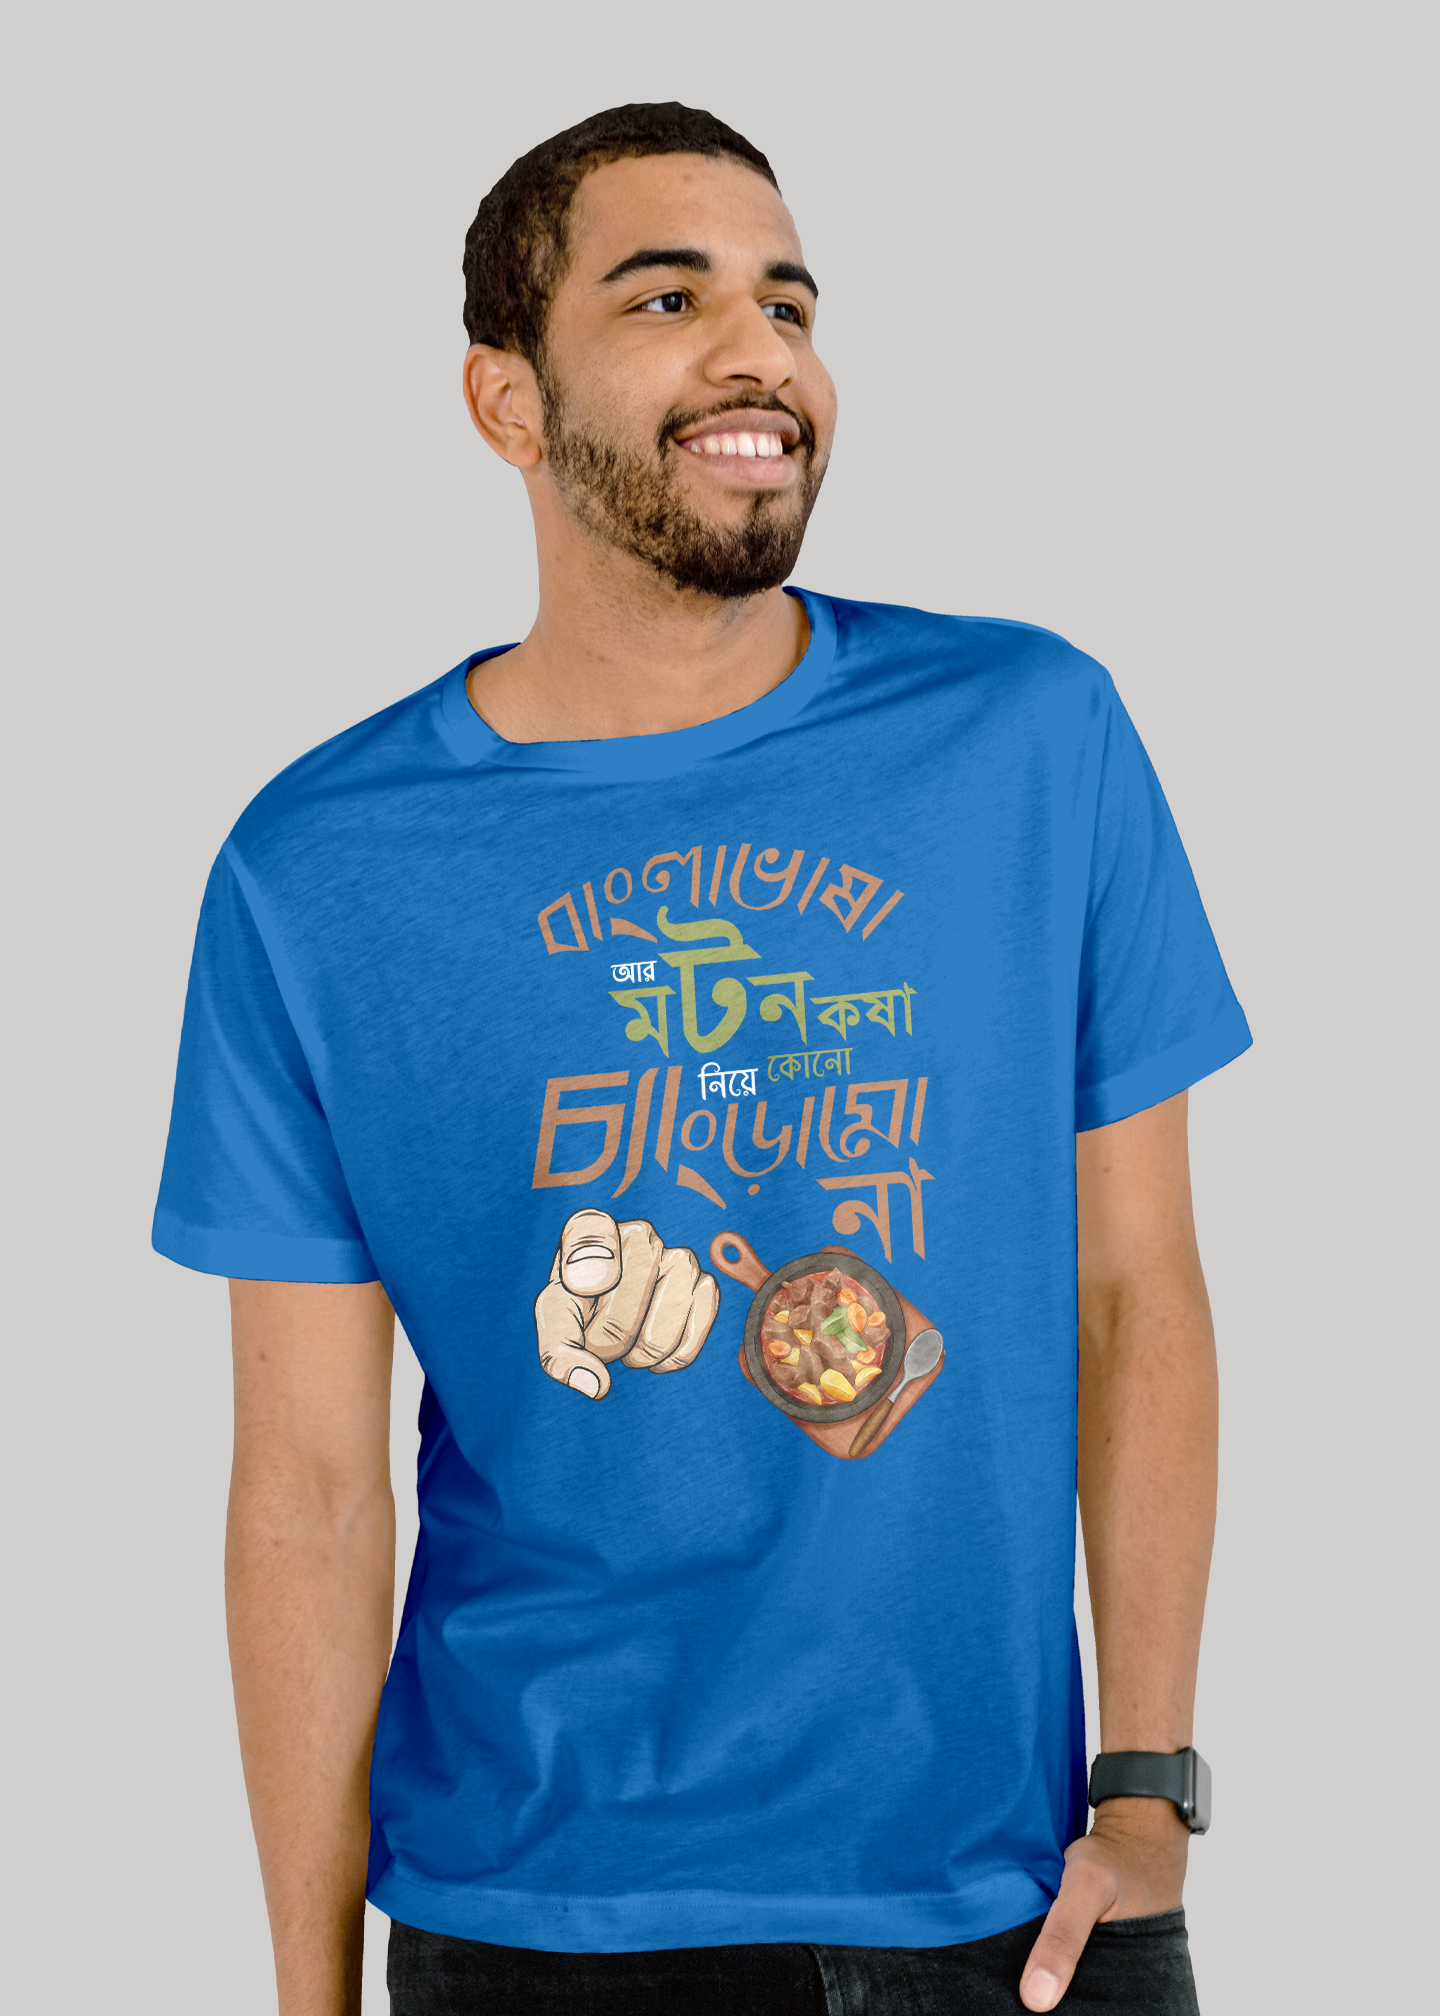 Bangla vasha r mutton koshabengali Bengali Printed Half Sleeve Premium Cotton T-shirt For Men